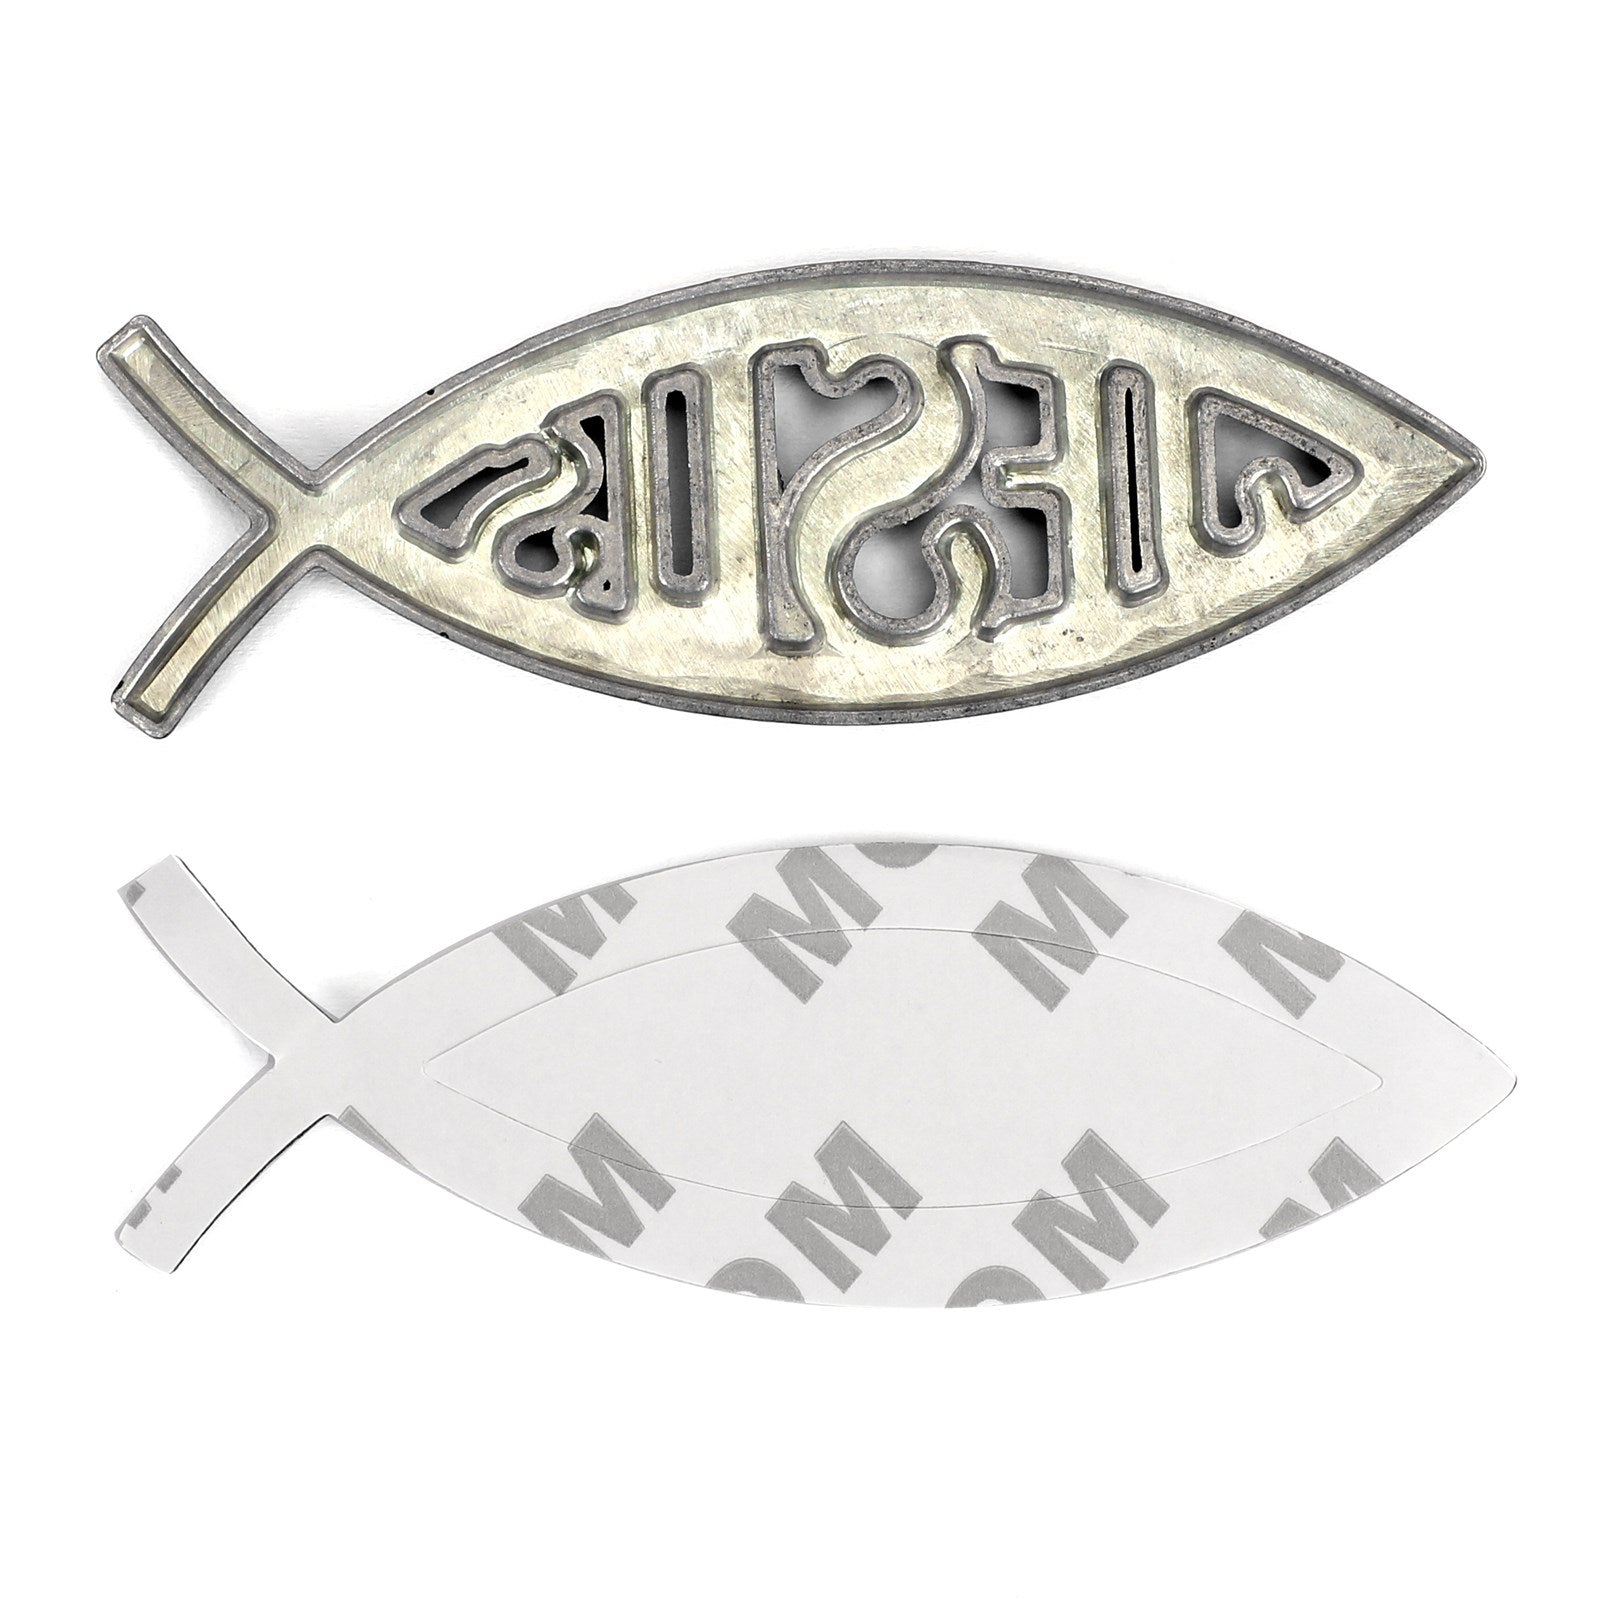 Etiqueta engomada del coche 3D Emblema Calcomanía Dios religioso para Christian Jesus Fish Símbolo Plata